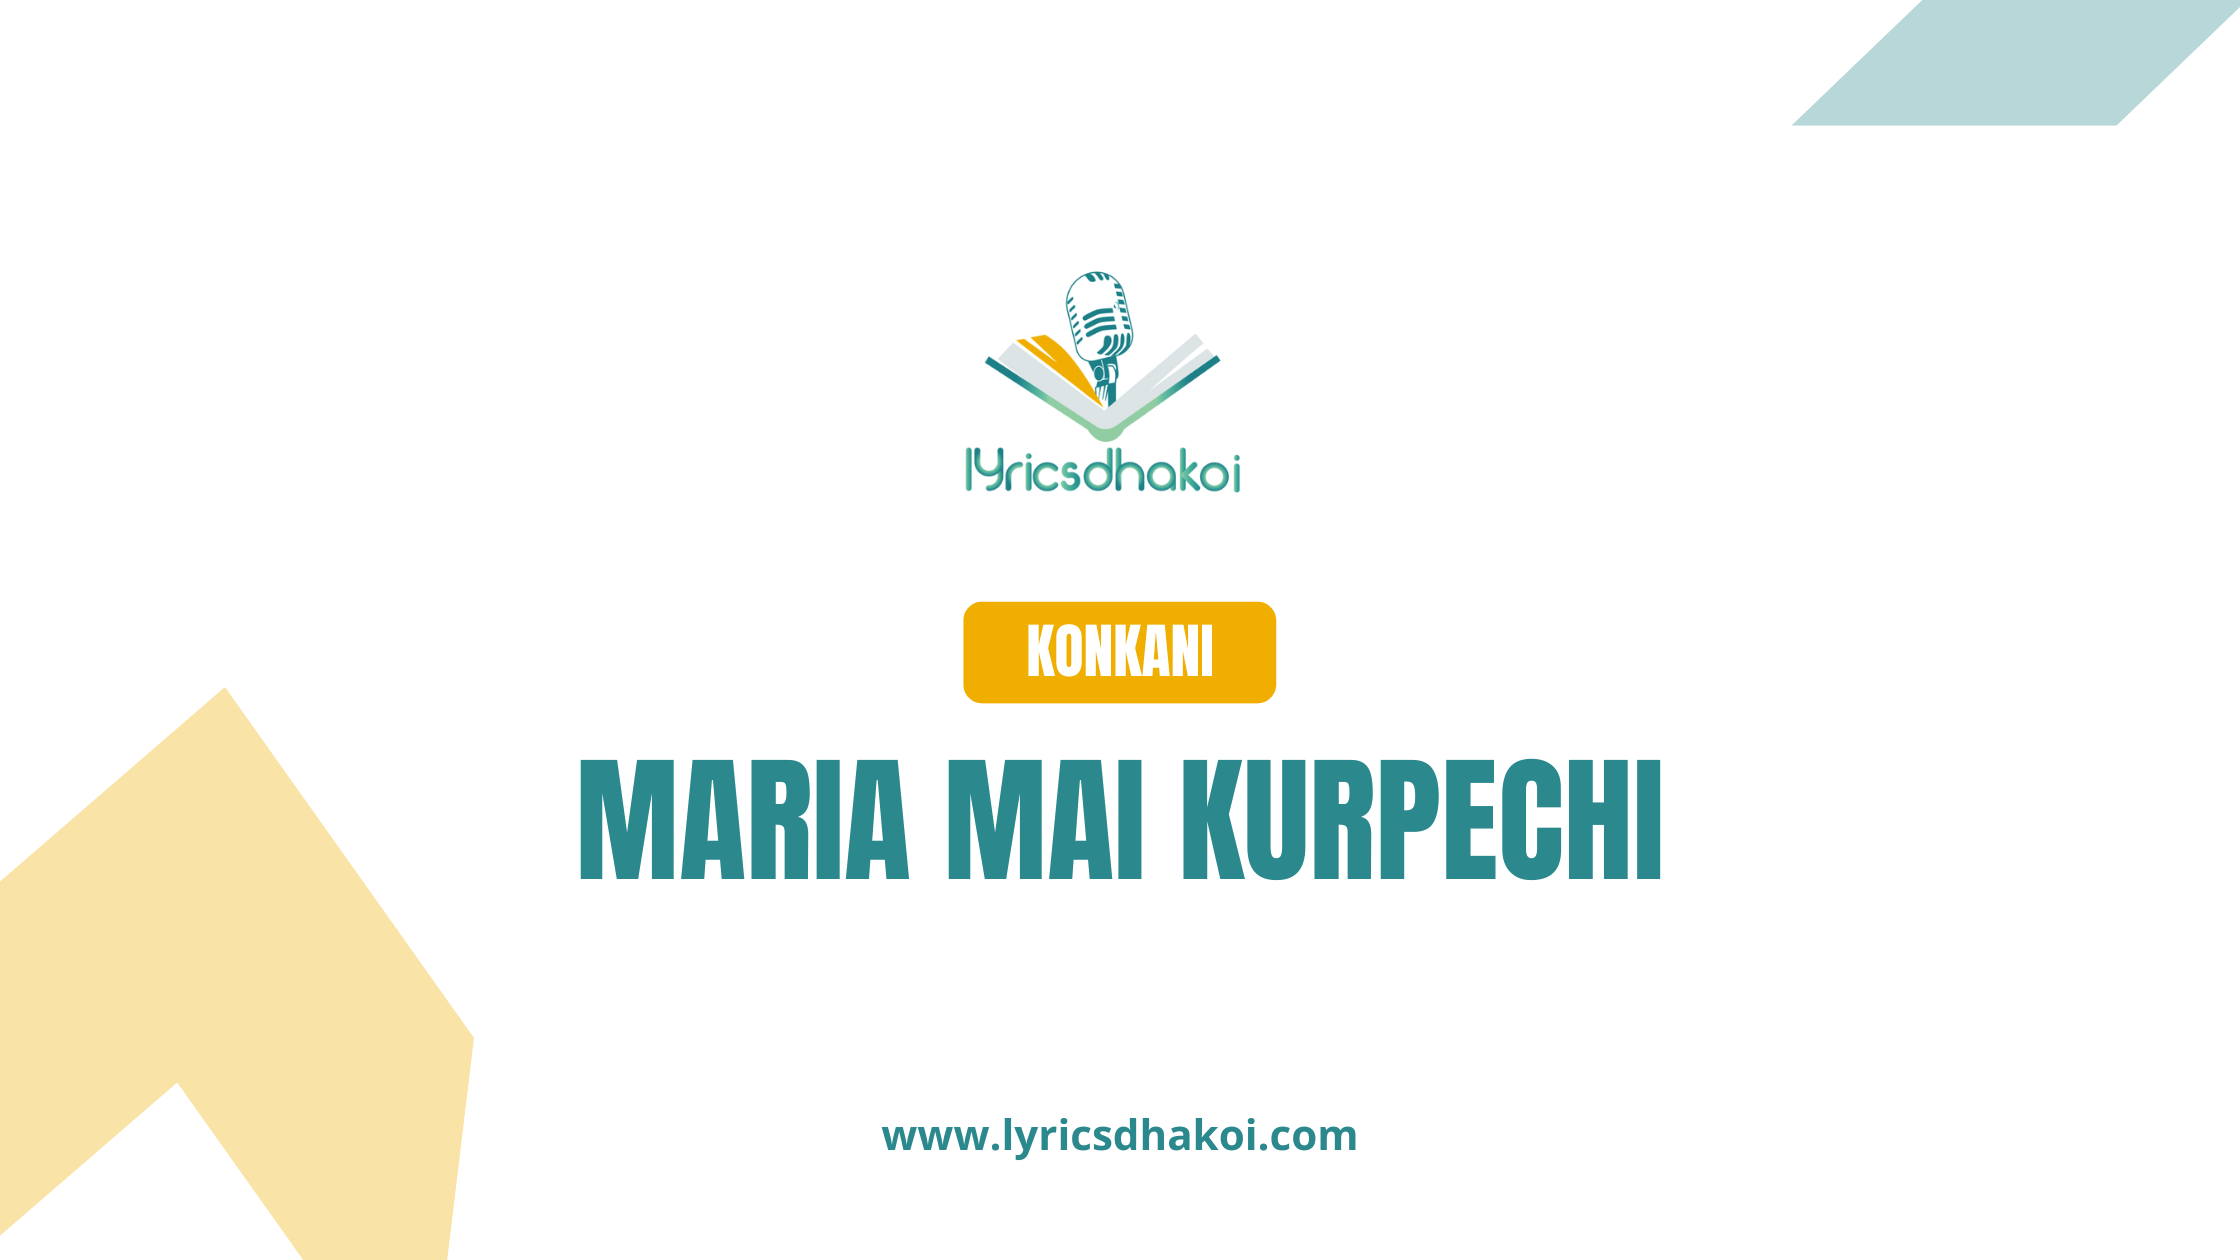 Maria Mai Kurpechi Konkani Lyrics for Karaoke Online - LyricsDhakoi.com